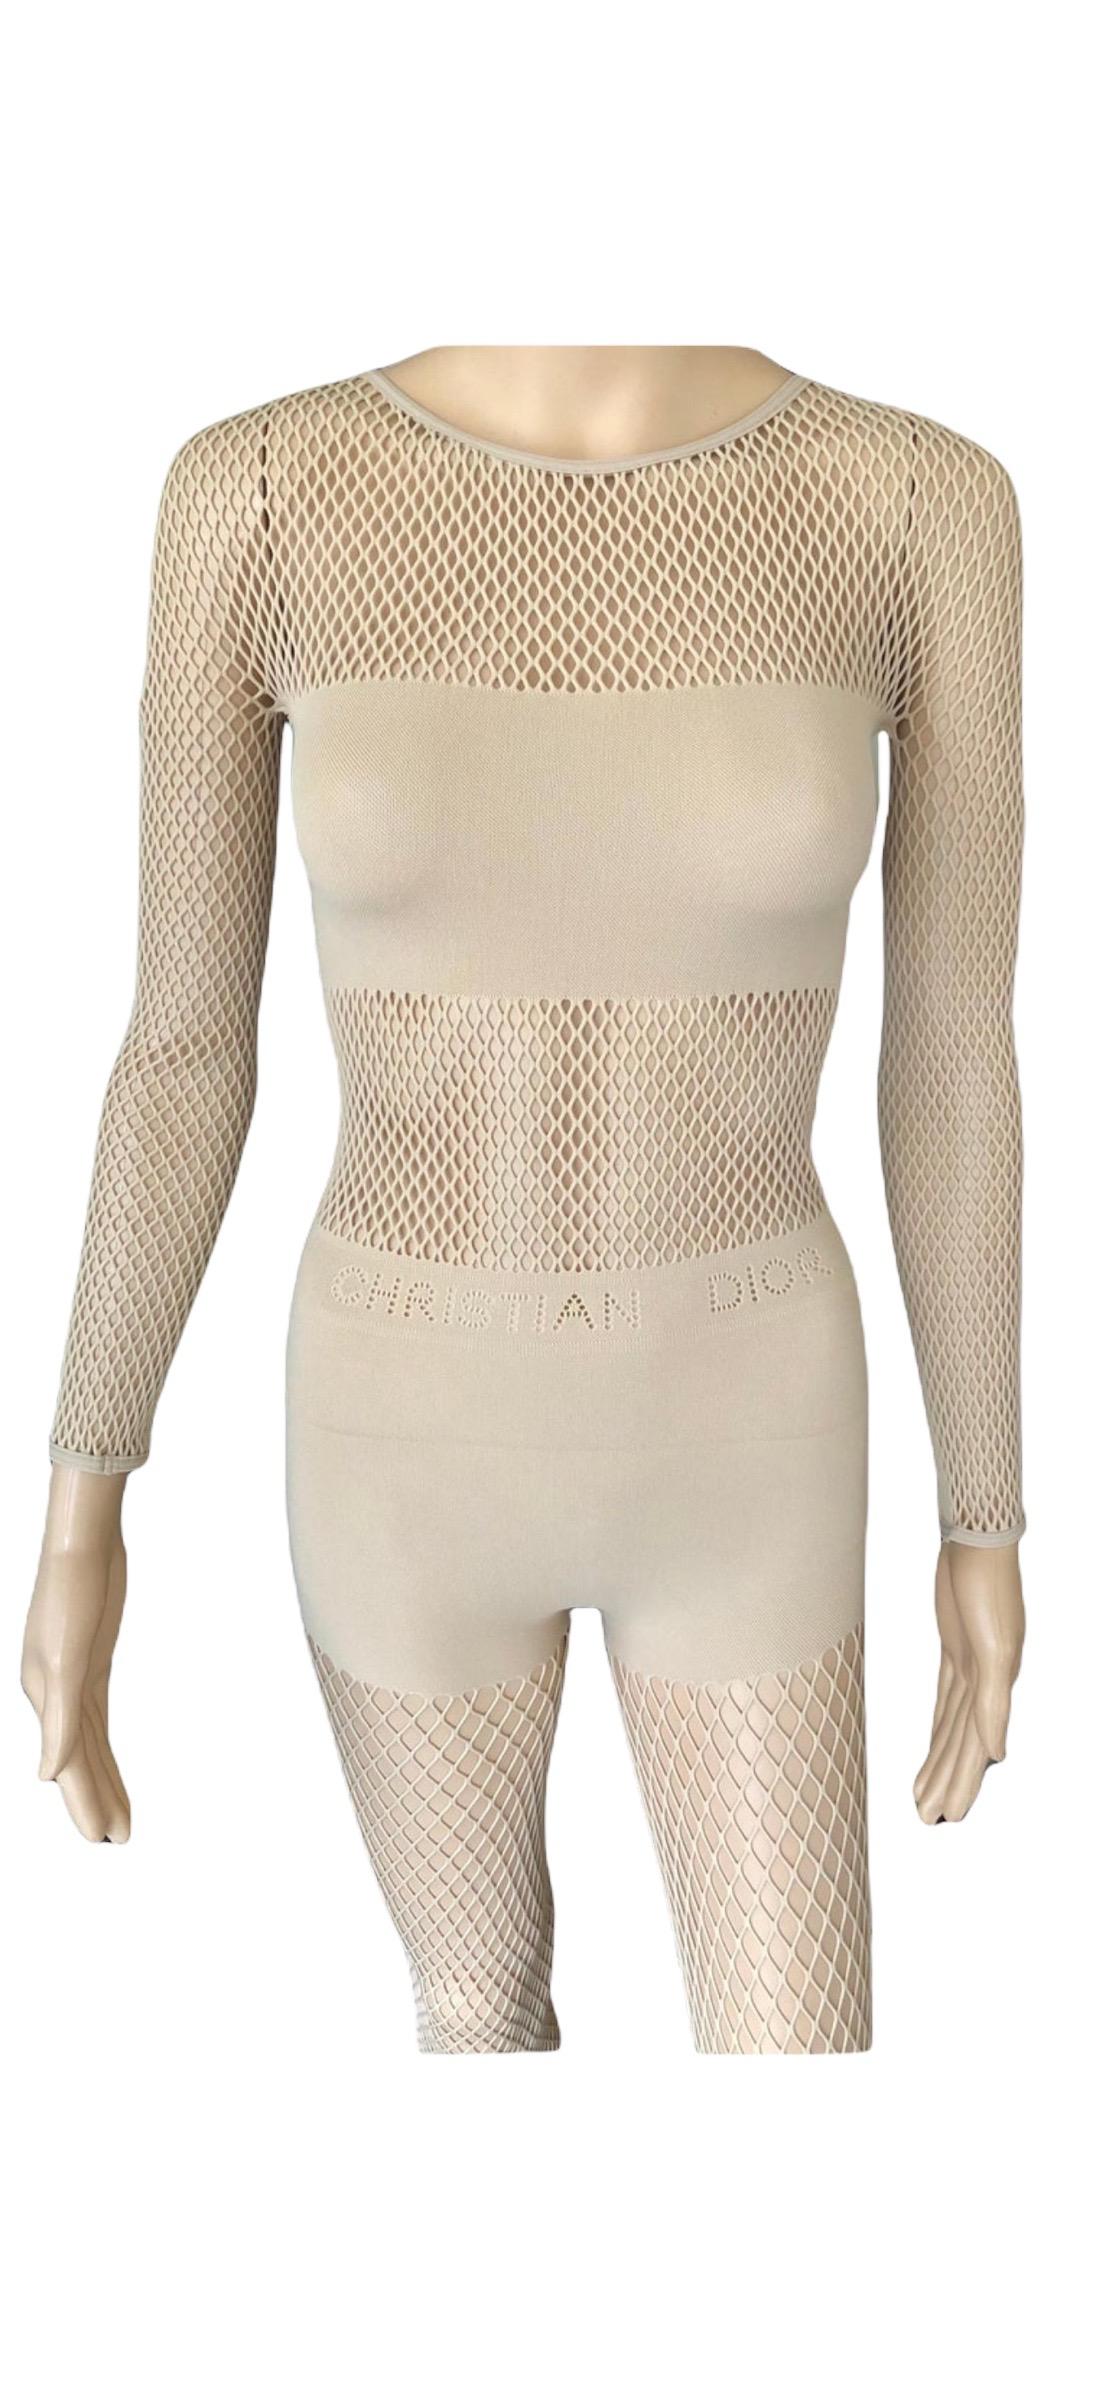 New Christian Dior Logo Monogram Sheer Mesh Fishnet Bodysuit Playsuit Jumpsuit 9